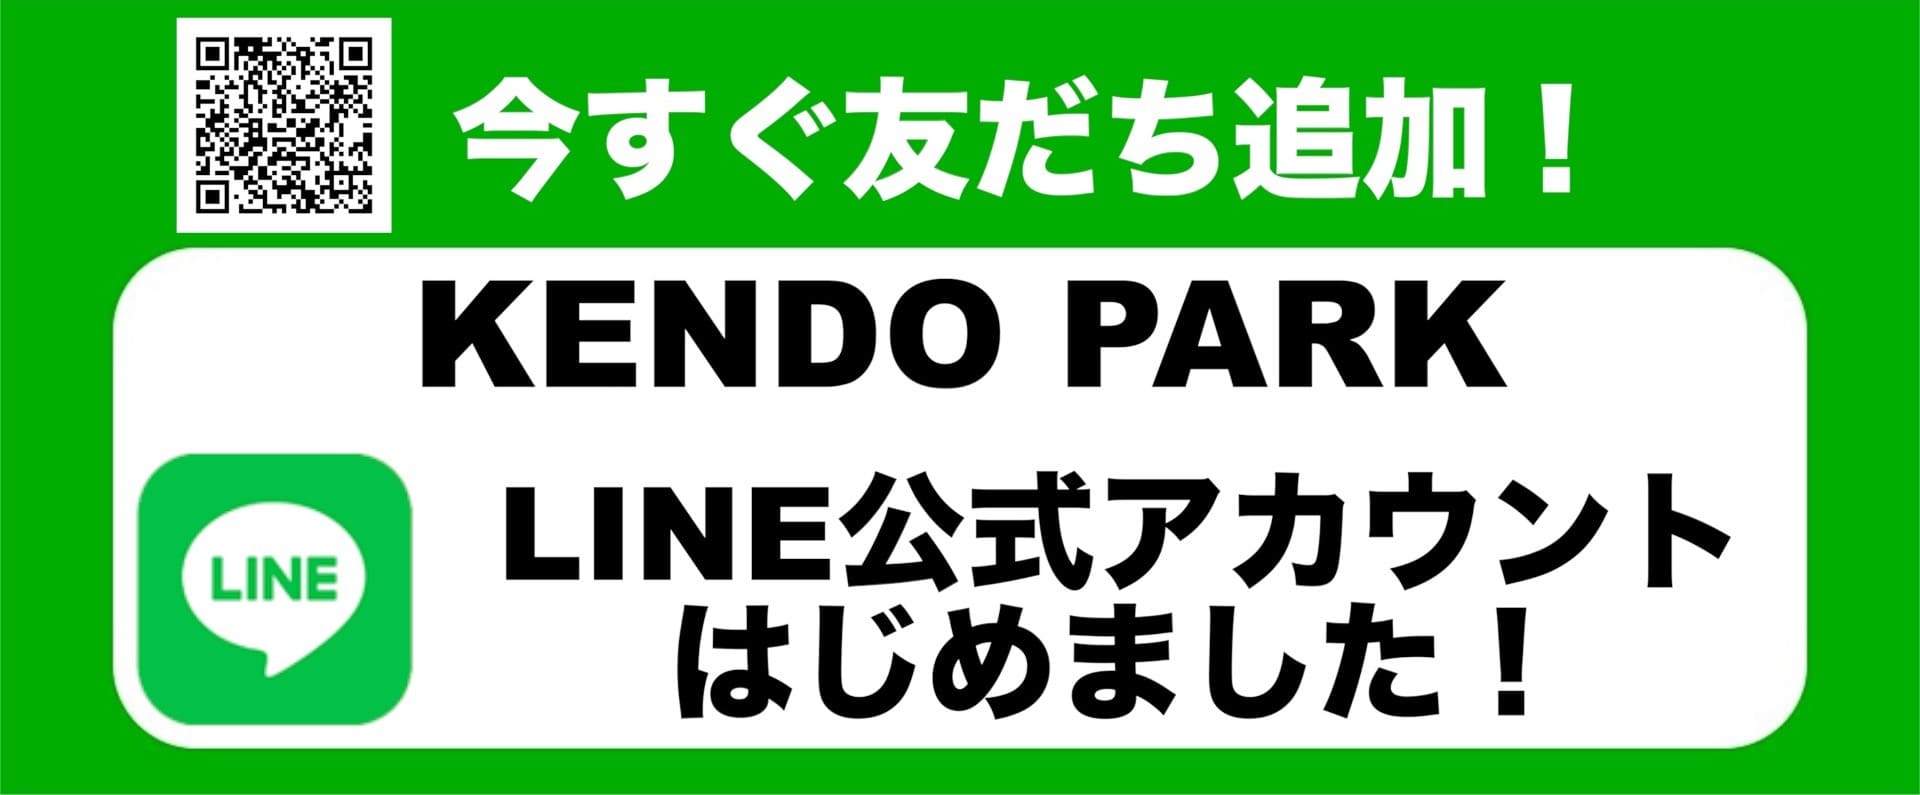 kendopark line